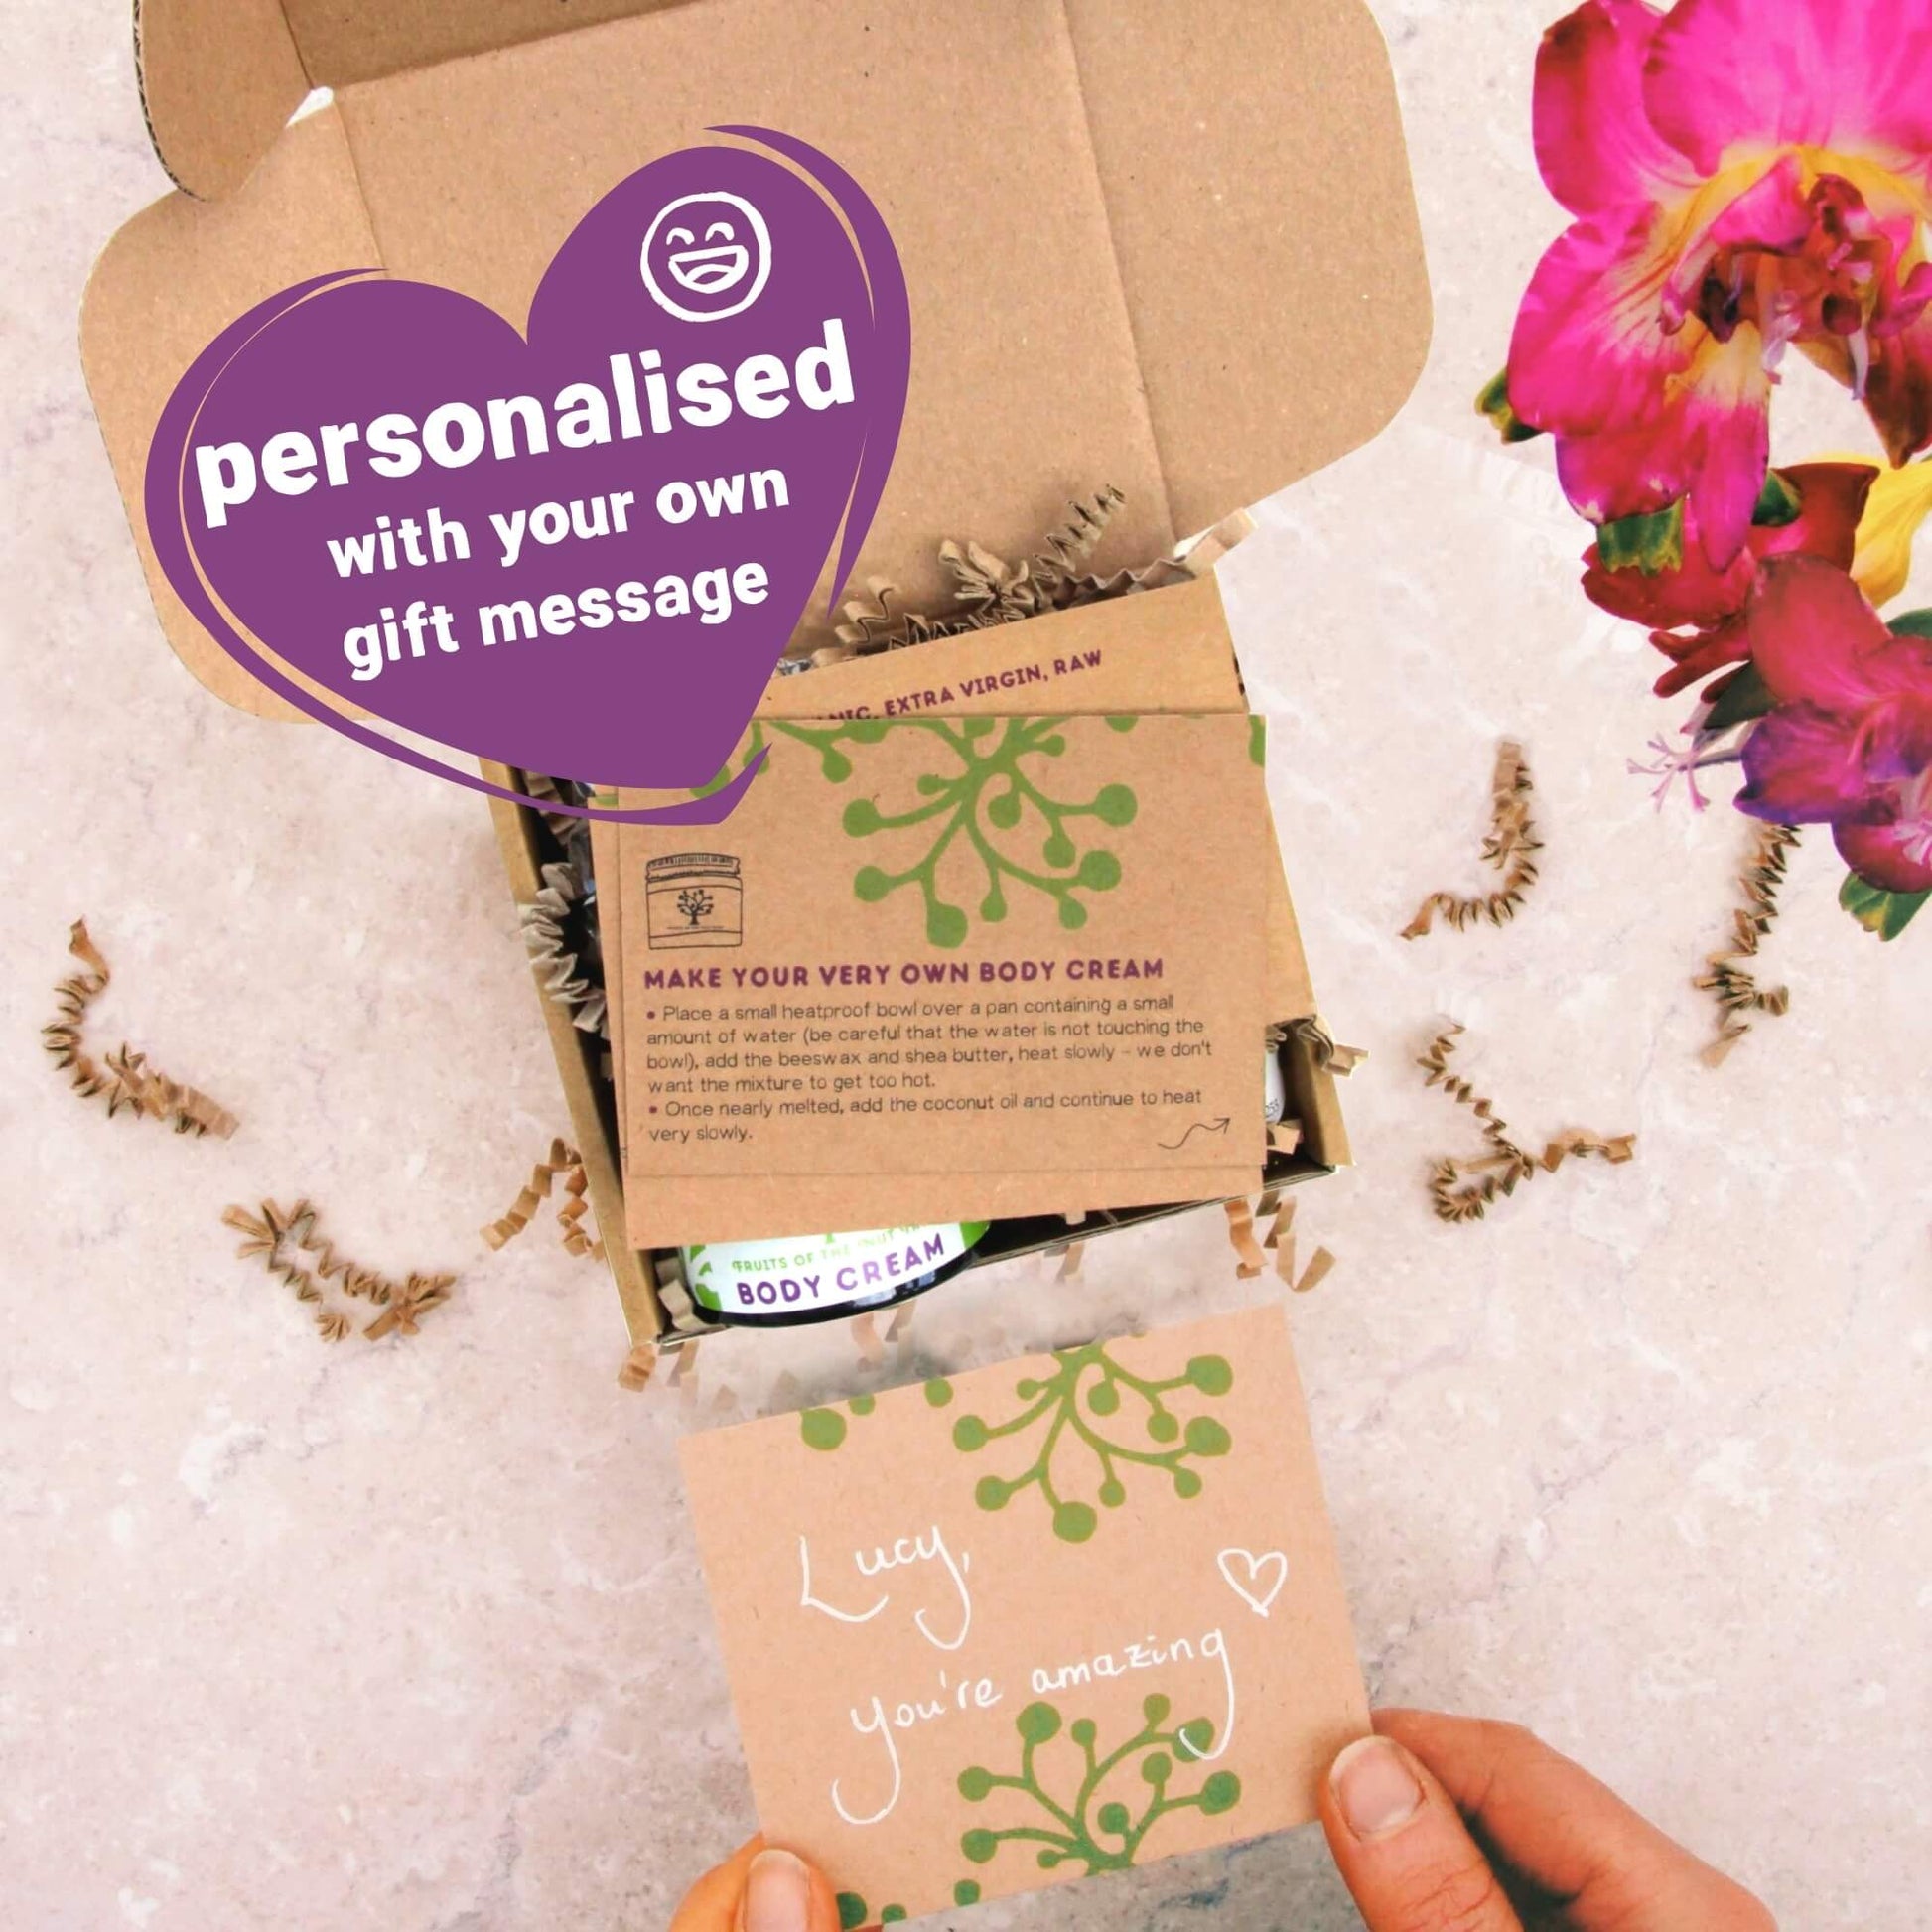 personalised gift message inside sending hug gift box